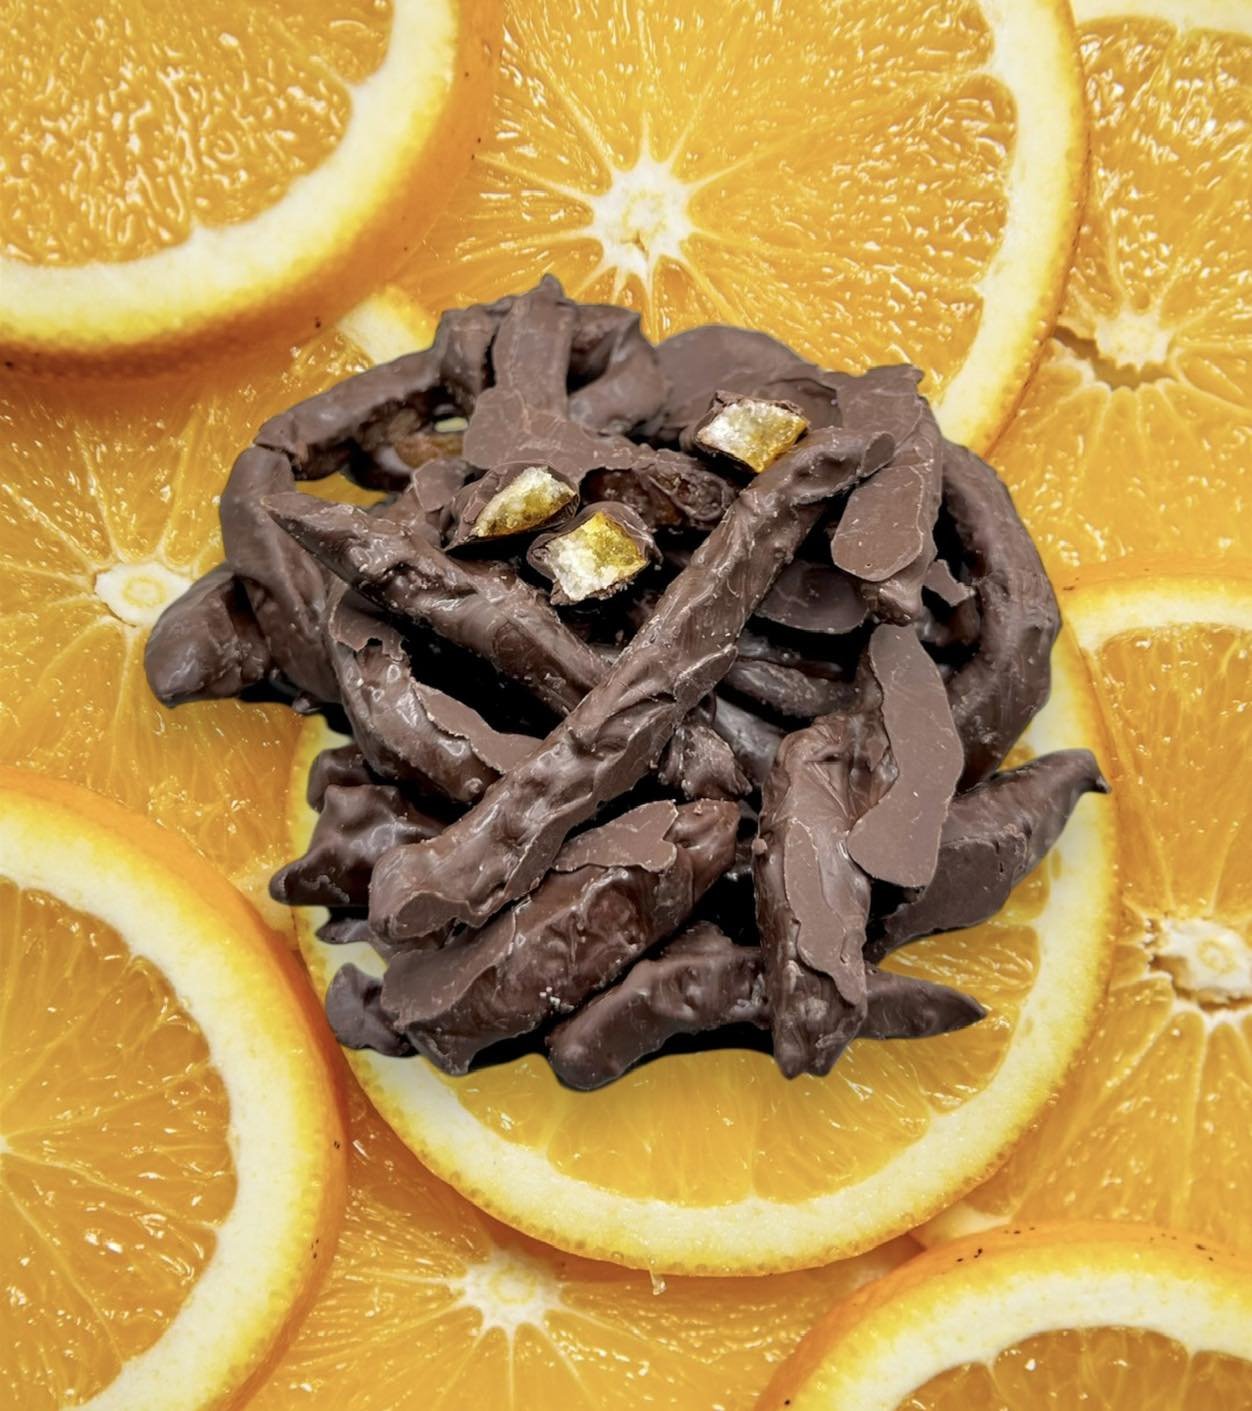 Make life zestier with some dark chocolate orange peels 🍊😋
.
.
.
#sweettooth #dessert #sweet #snacks #sweettreats #candyshop #candy #candystore #ssi #stsimonsisland #stsimons #handmade #homemade #georgia #gummyorangepeels  #darkchocolate